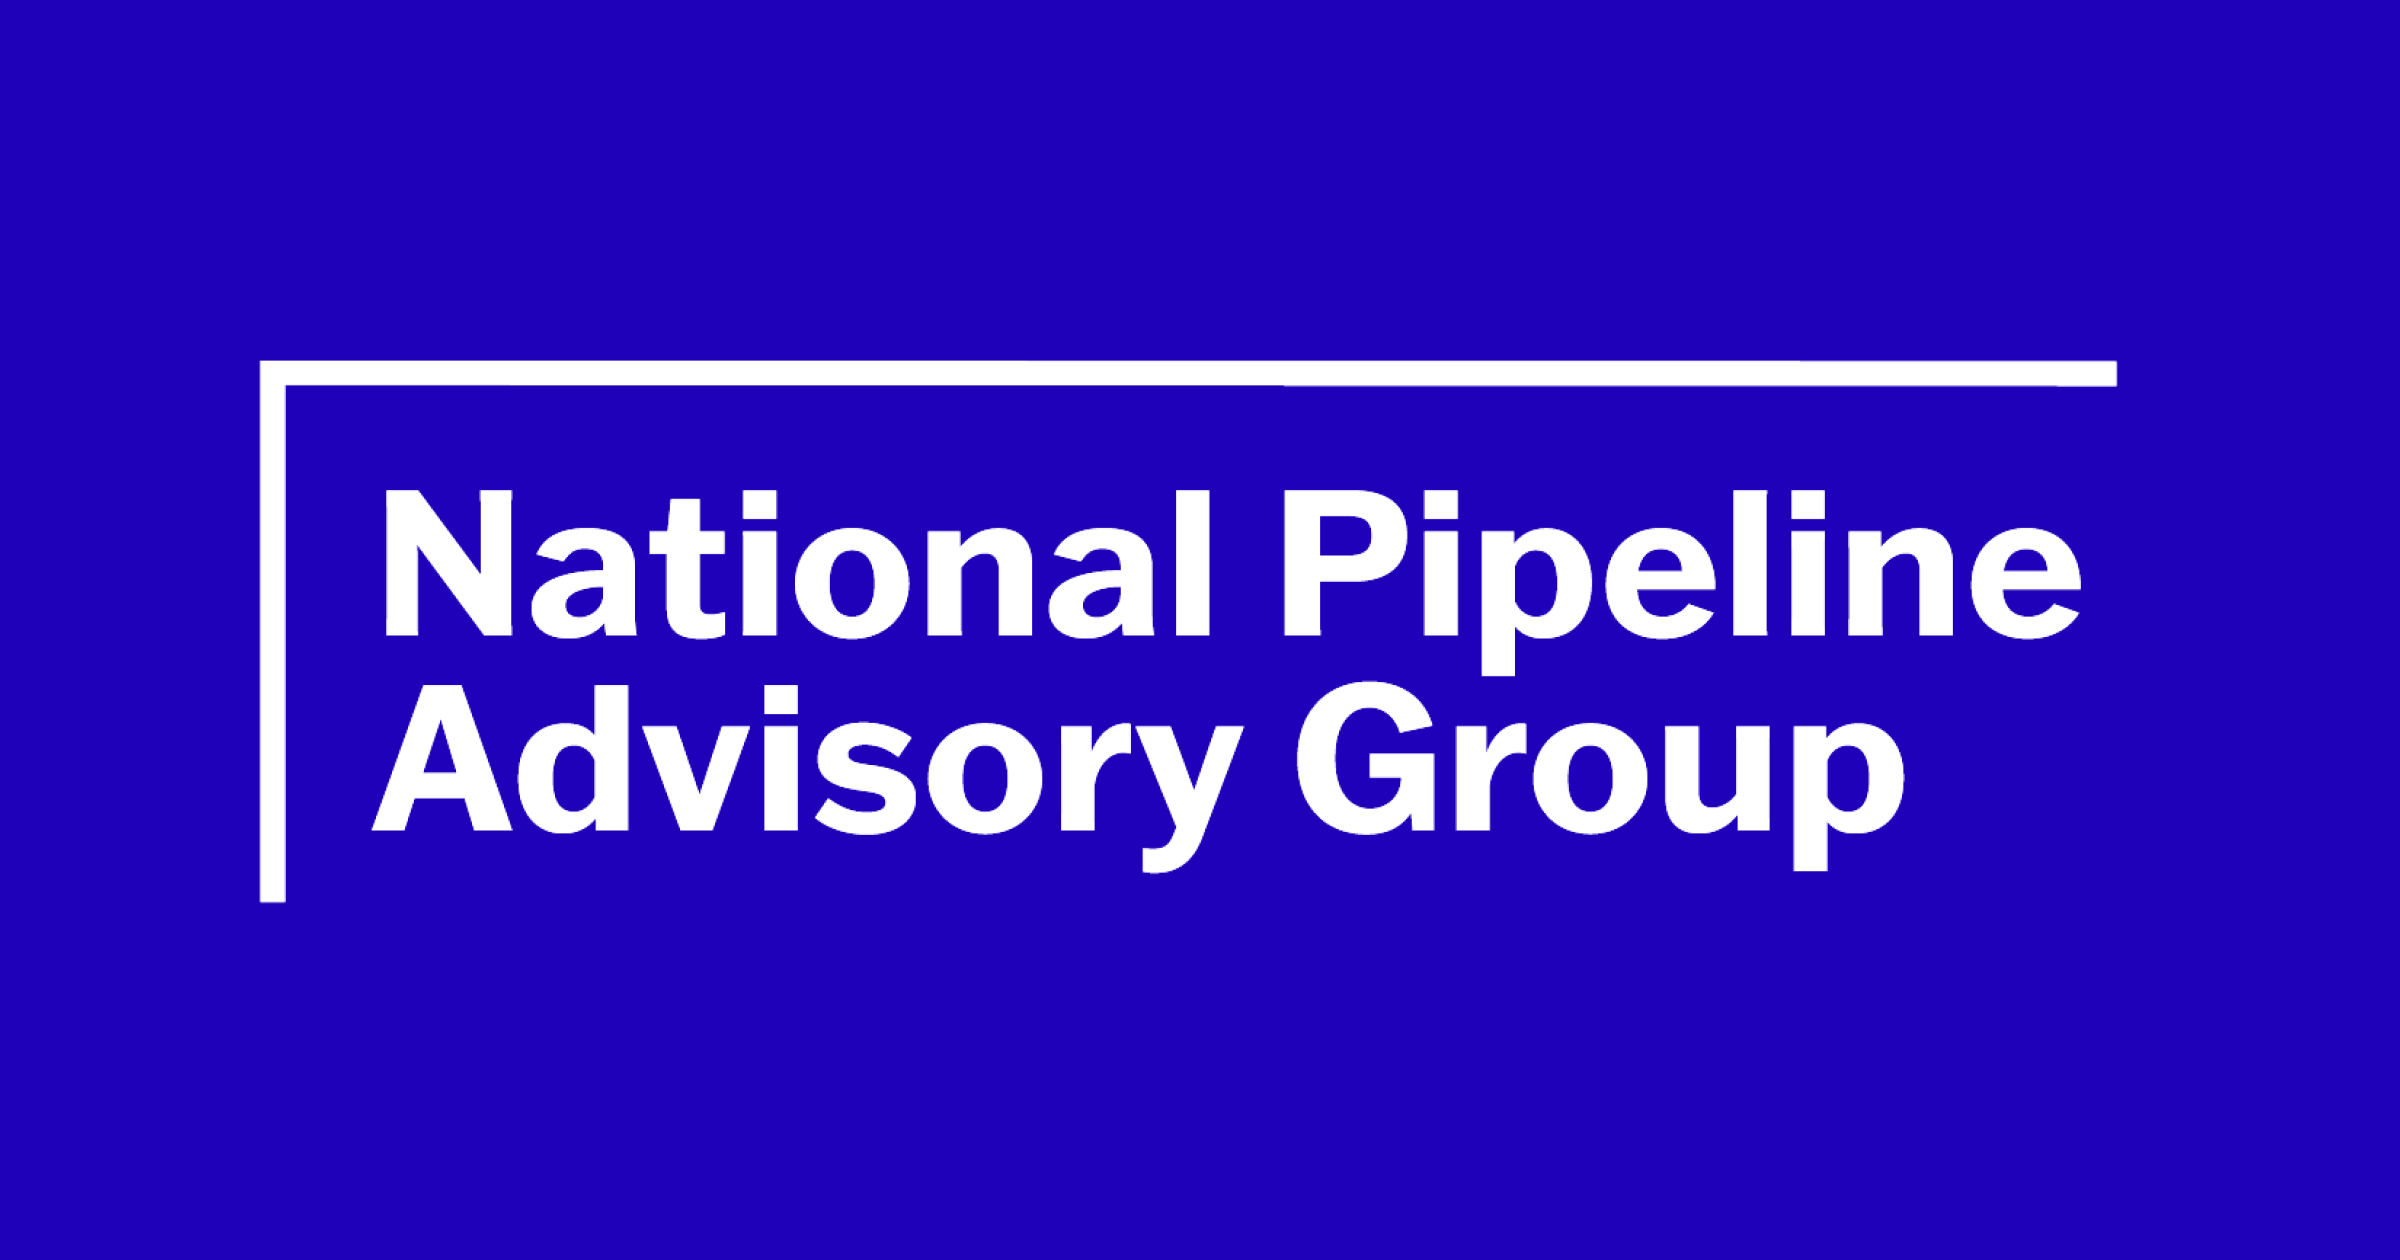 Advisory group making progress, seeking inclusivity on national strategy to address accounting talent shortage